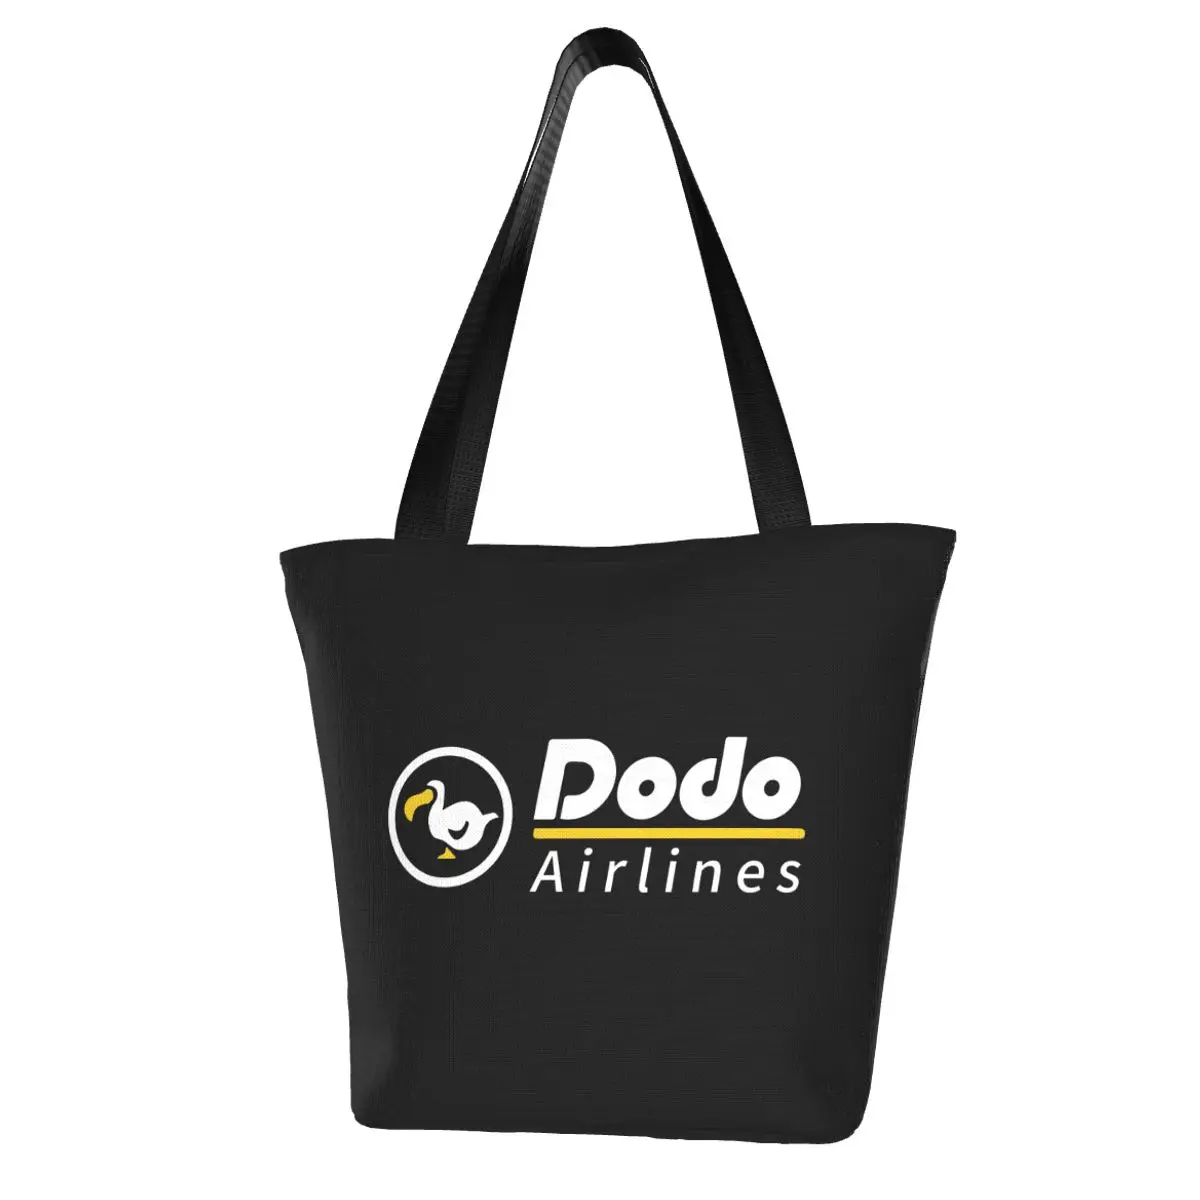 Dodo Airlines Shopping Bag Aesthetic Cloth Outdoor Handbag Female Fashion Bags